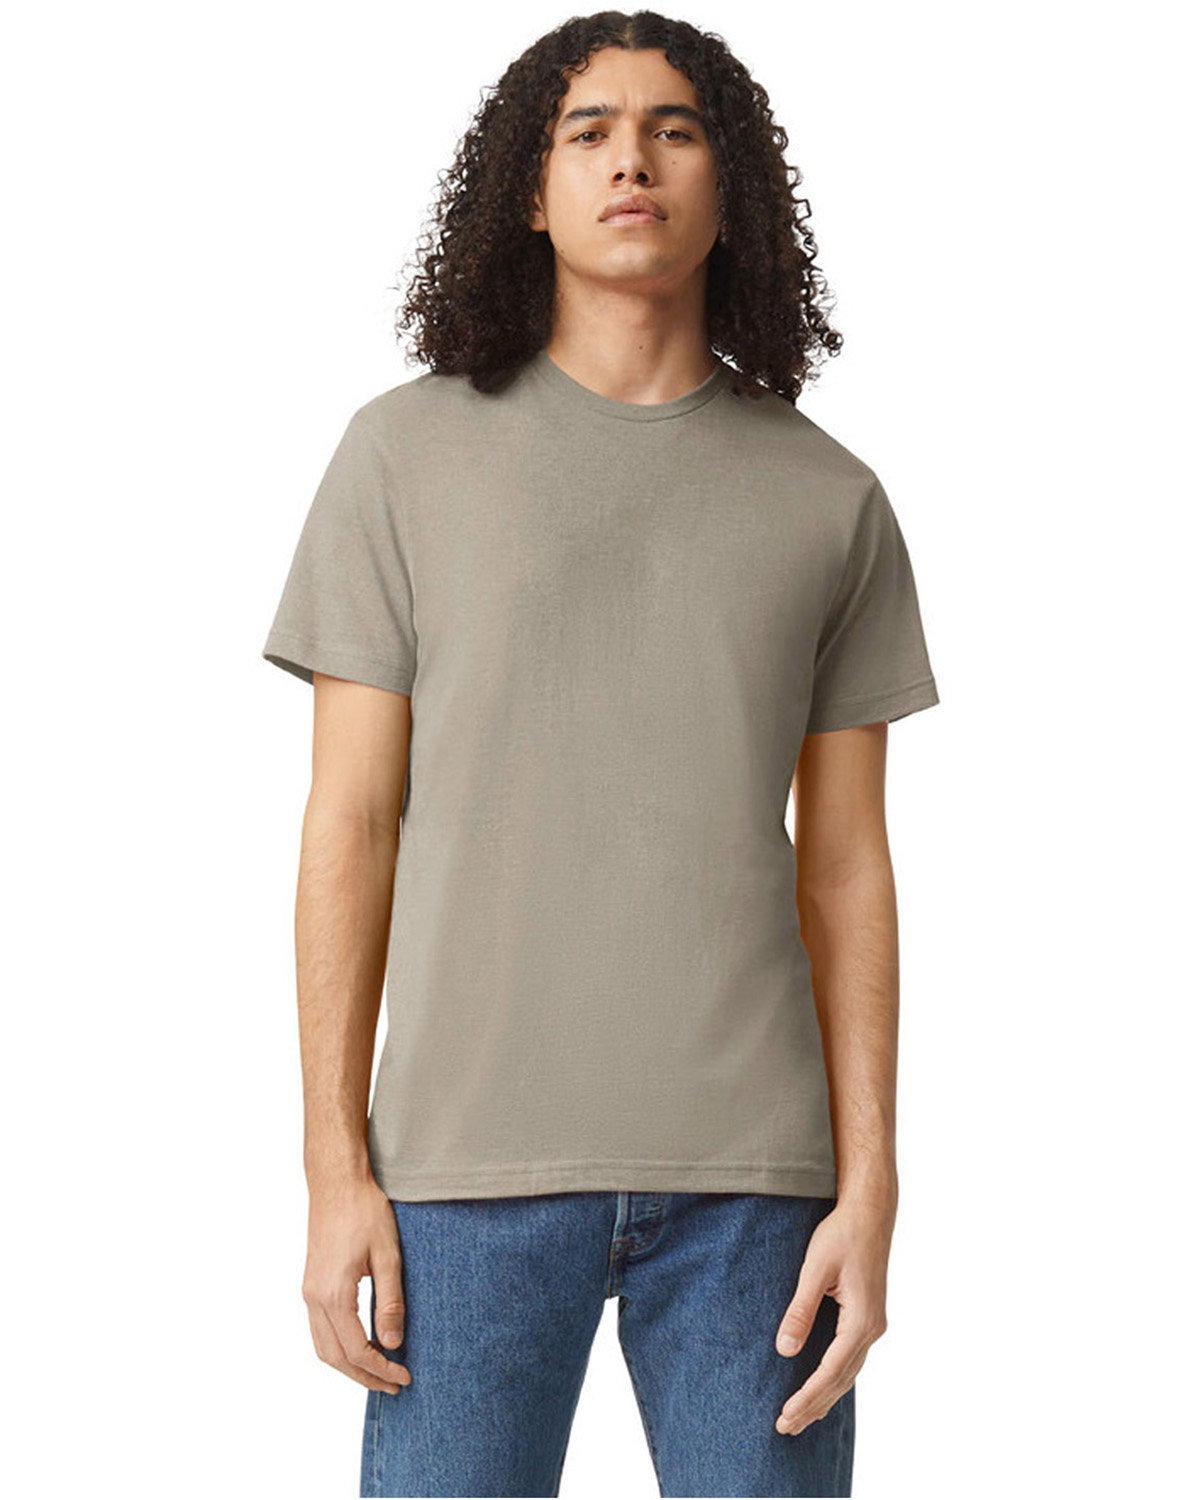 American Apparel Unisex CVC T-Shirt HEATHER KHAKI 